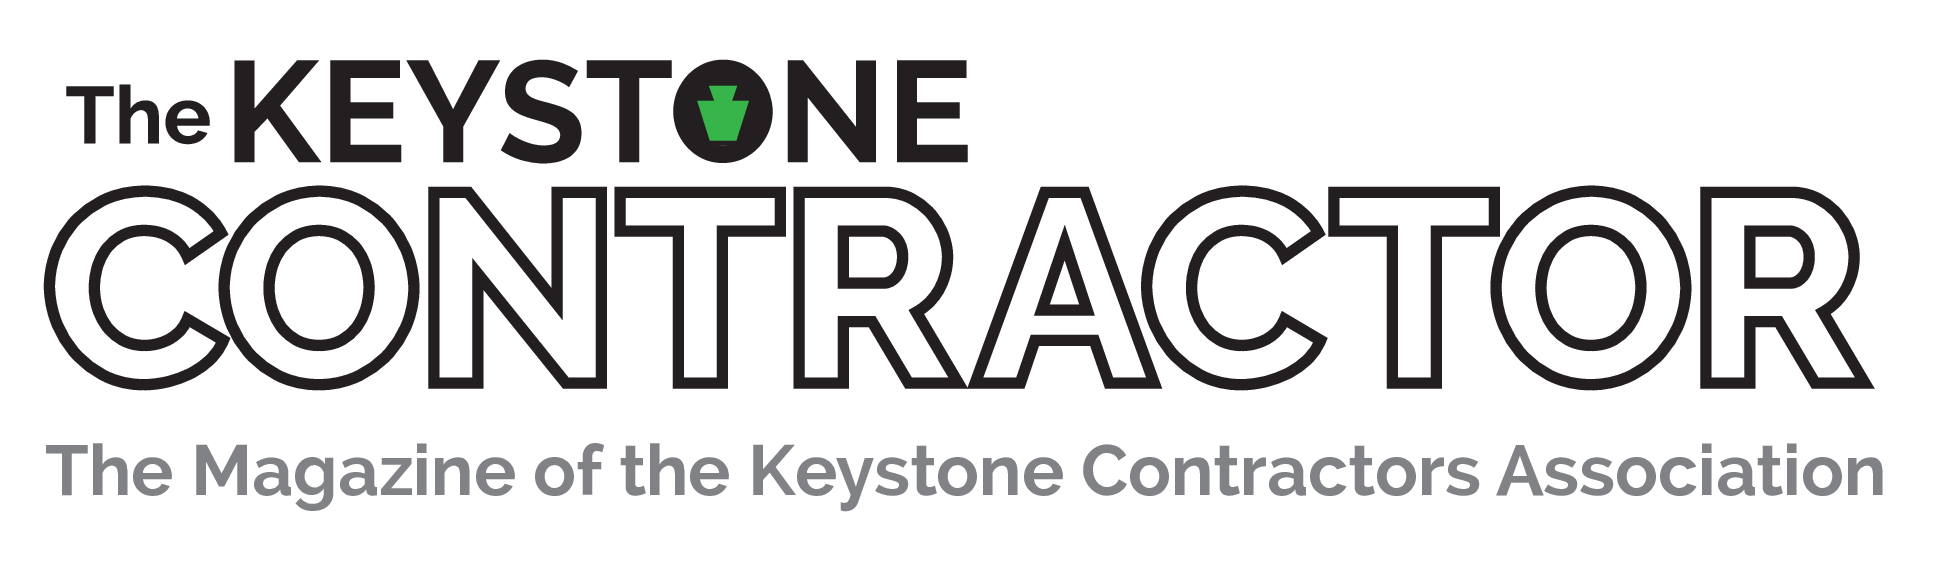 Keystone Contractor Magazine